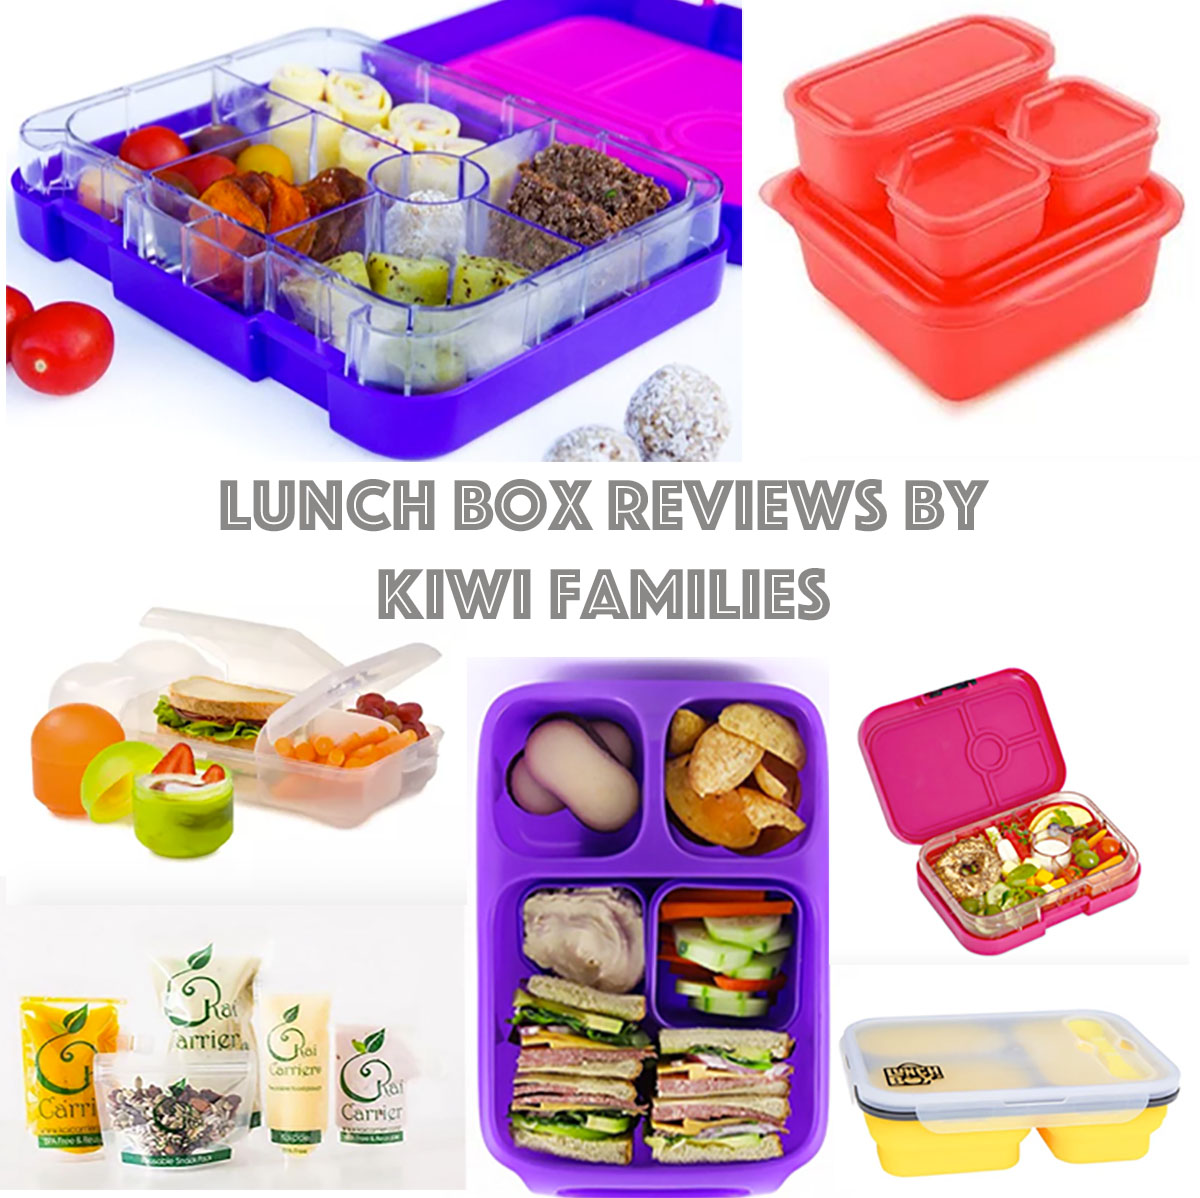 https://www.kiwifamilies.co.nz/wp-content/uploads/2017/01/Lunch-box-review-by-Kiwi-families.jpg